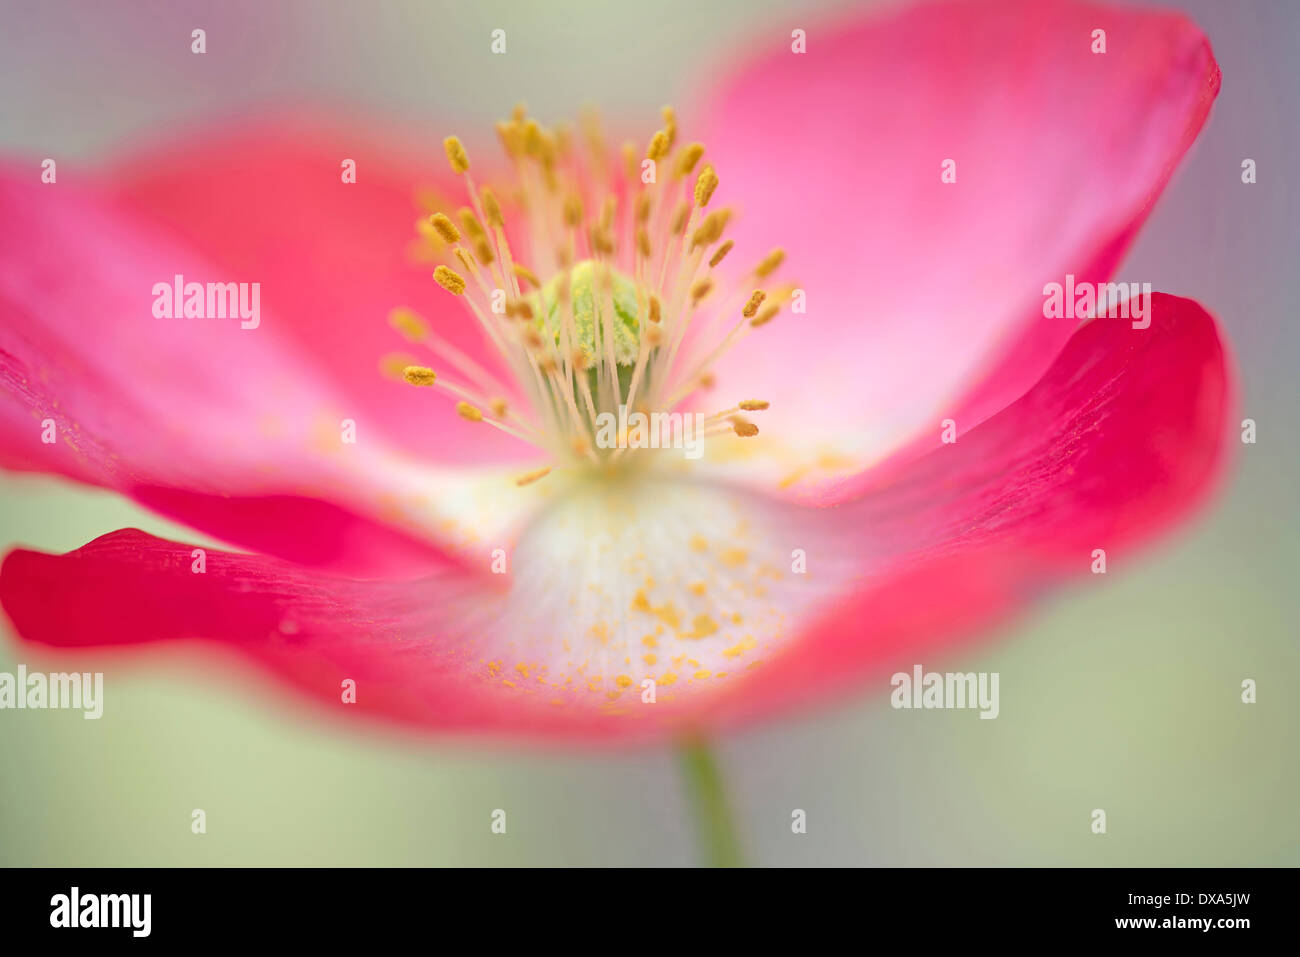 Shirley papavero, Papaver rhoeas Shirley serie, fiore rosa mostra stami e lo stigma. Foto Stock